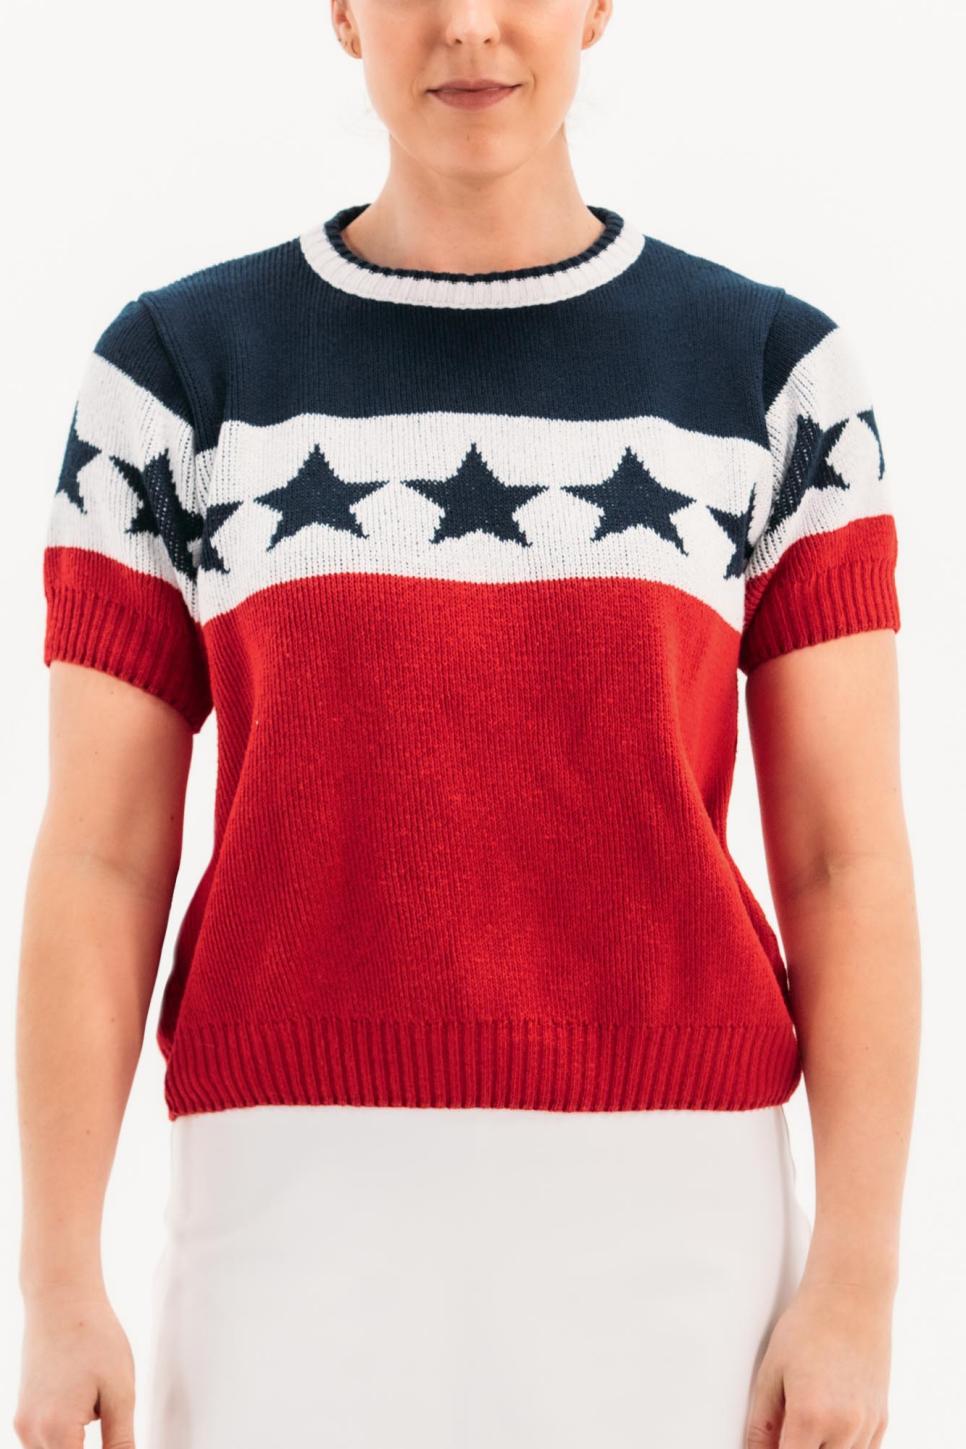 rx-forayamerica-short-sleeve-sweater.jpeg